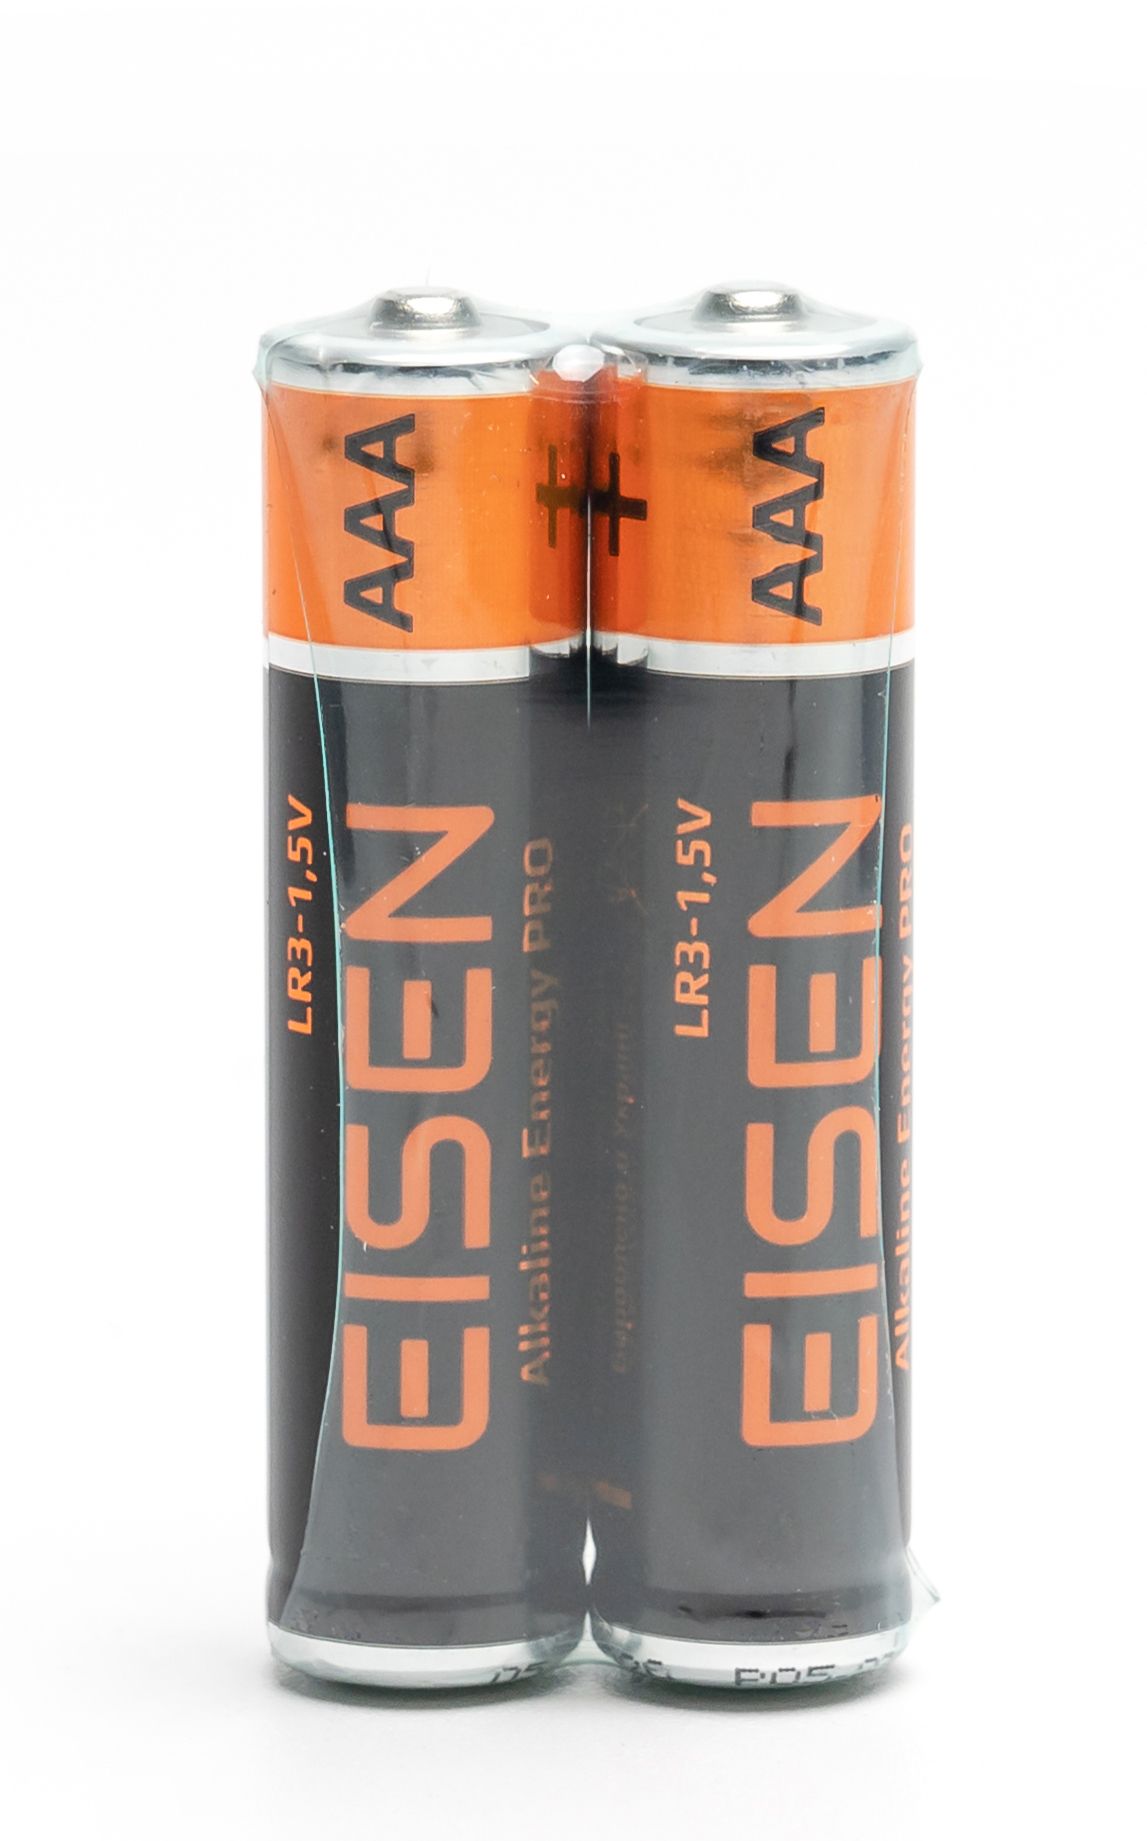 Батарейка Eisen Energy Alkaline PRO LR03 (AAA) спайка 2шт. в интернет-магазине, главное фото